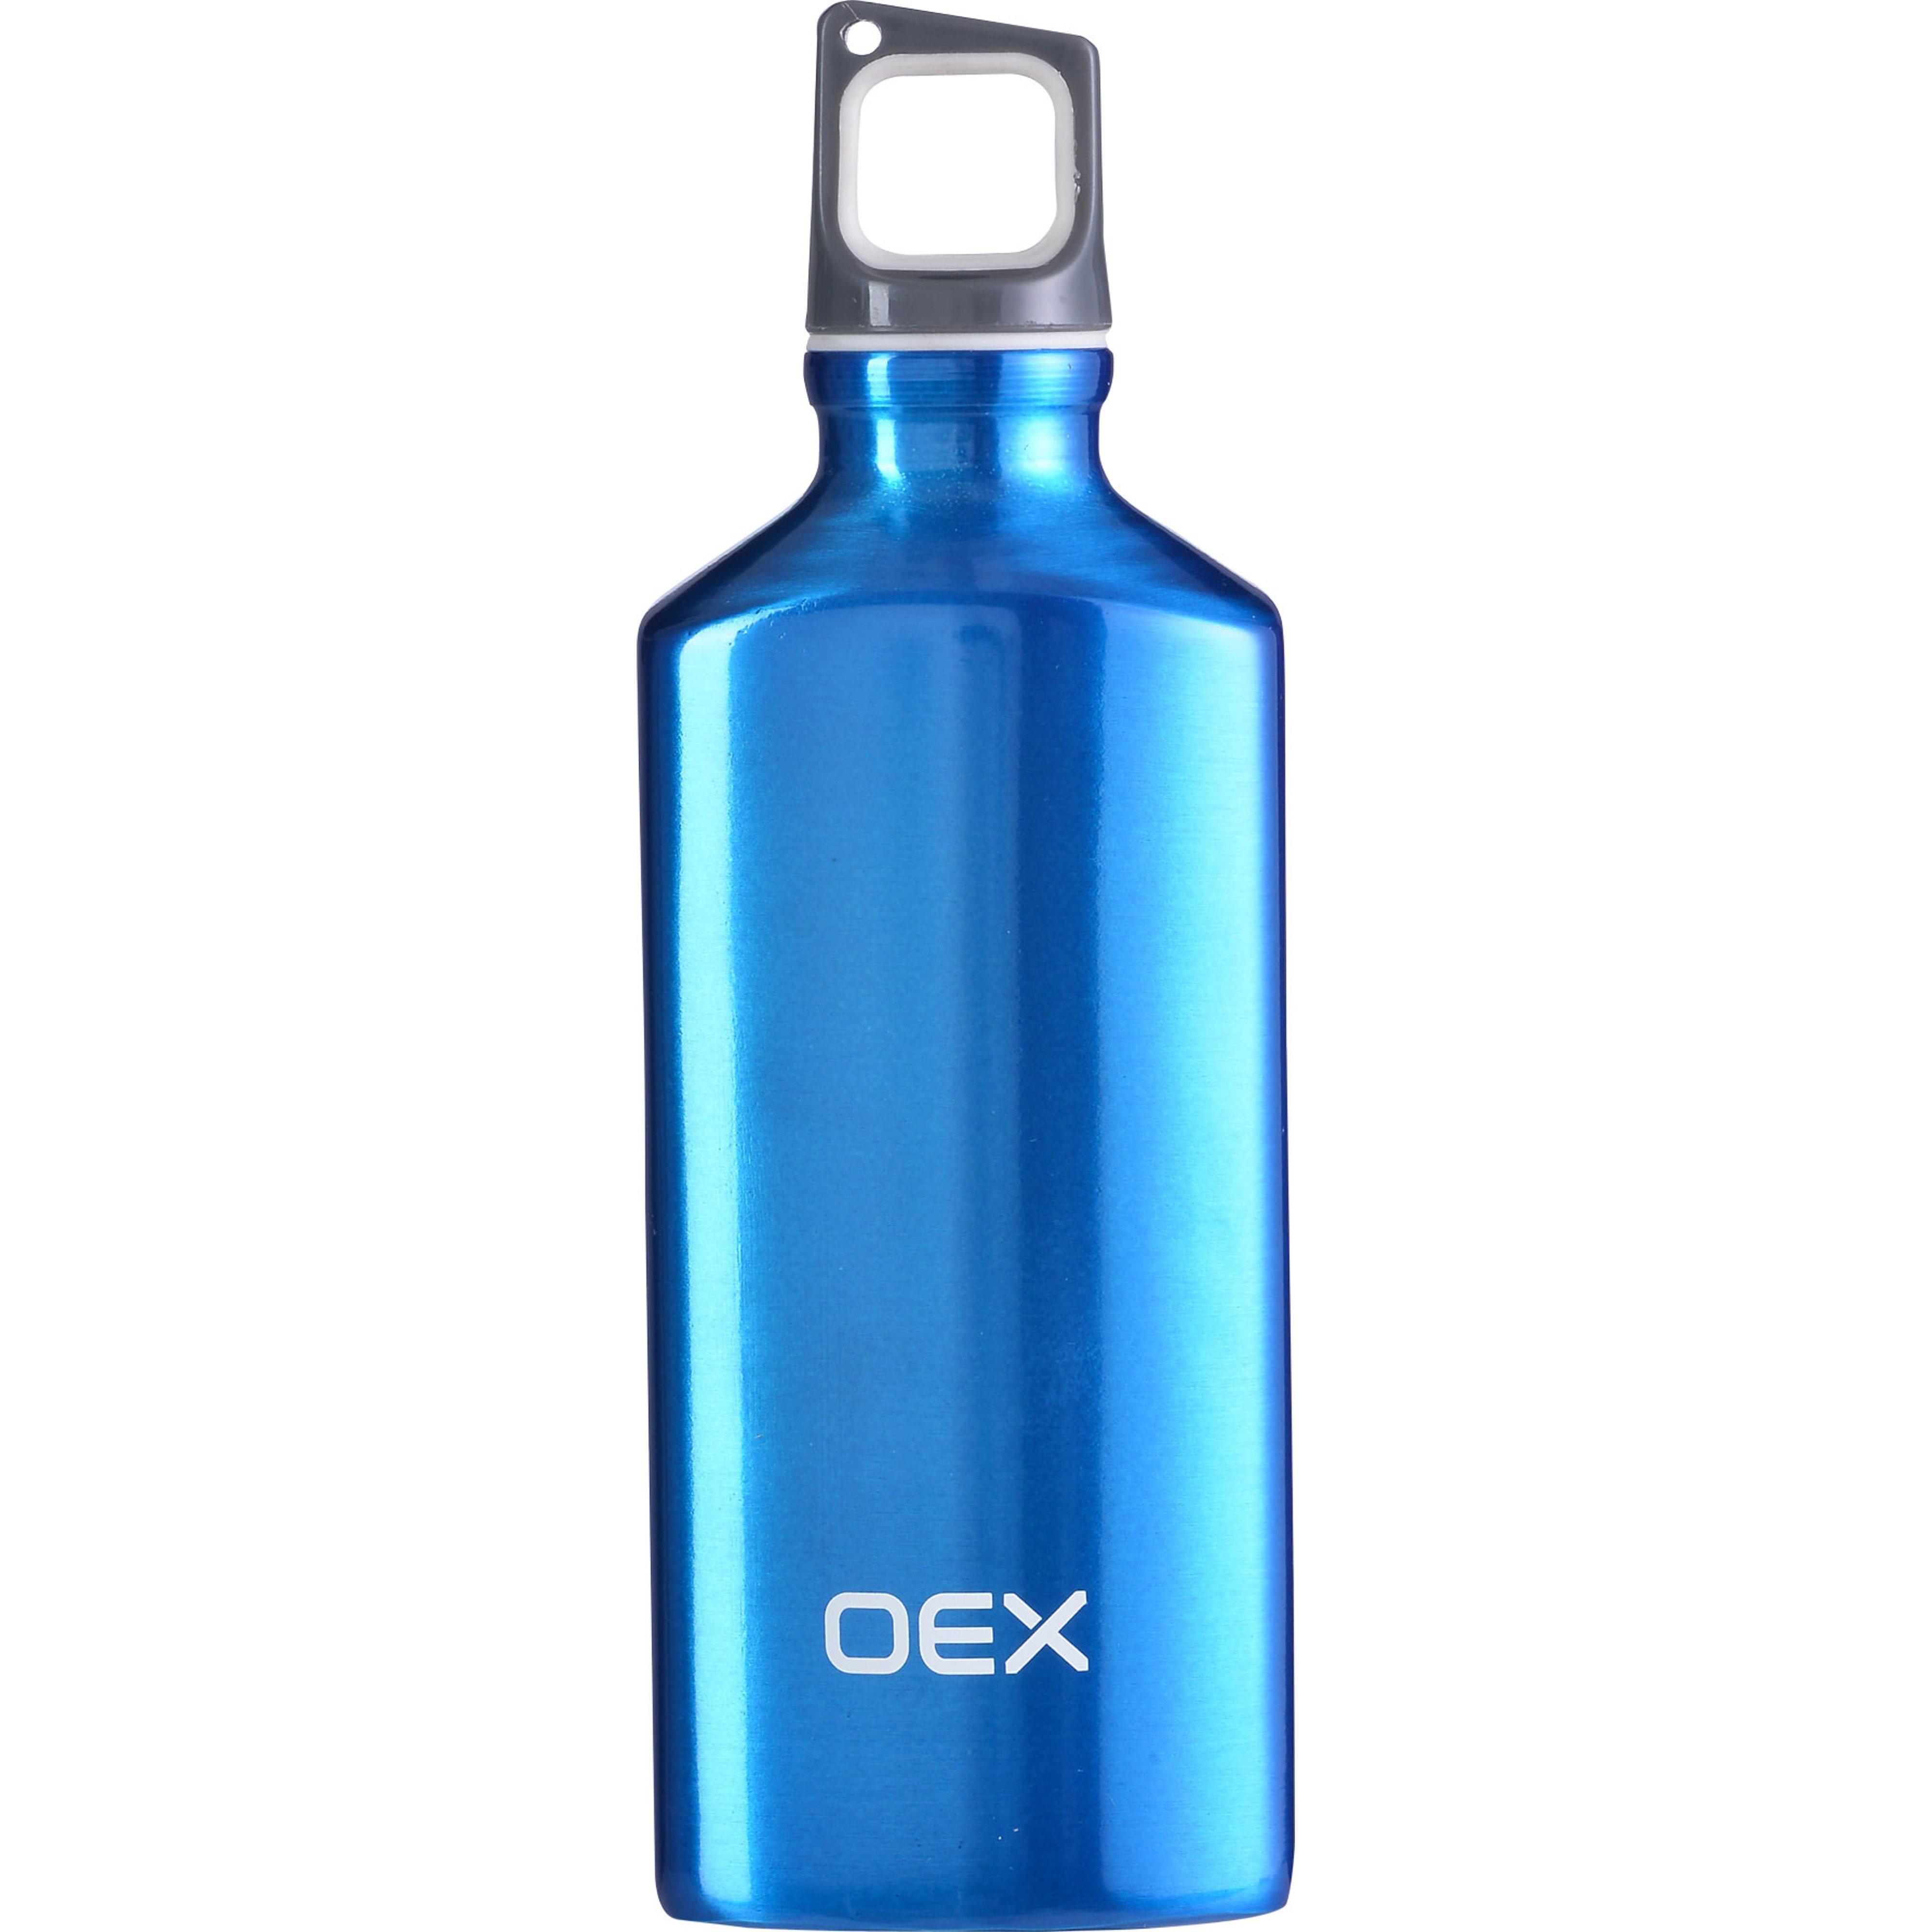 OEX 600ml Aluminium Bottle Review